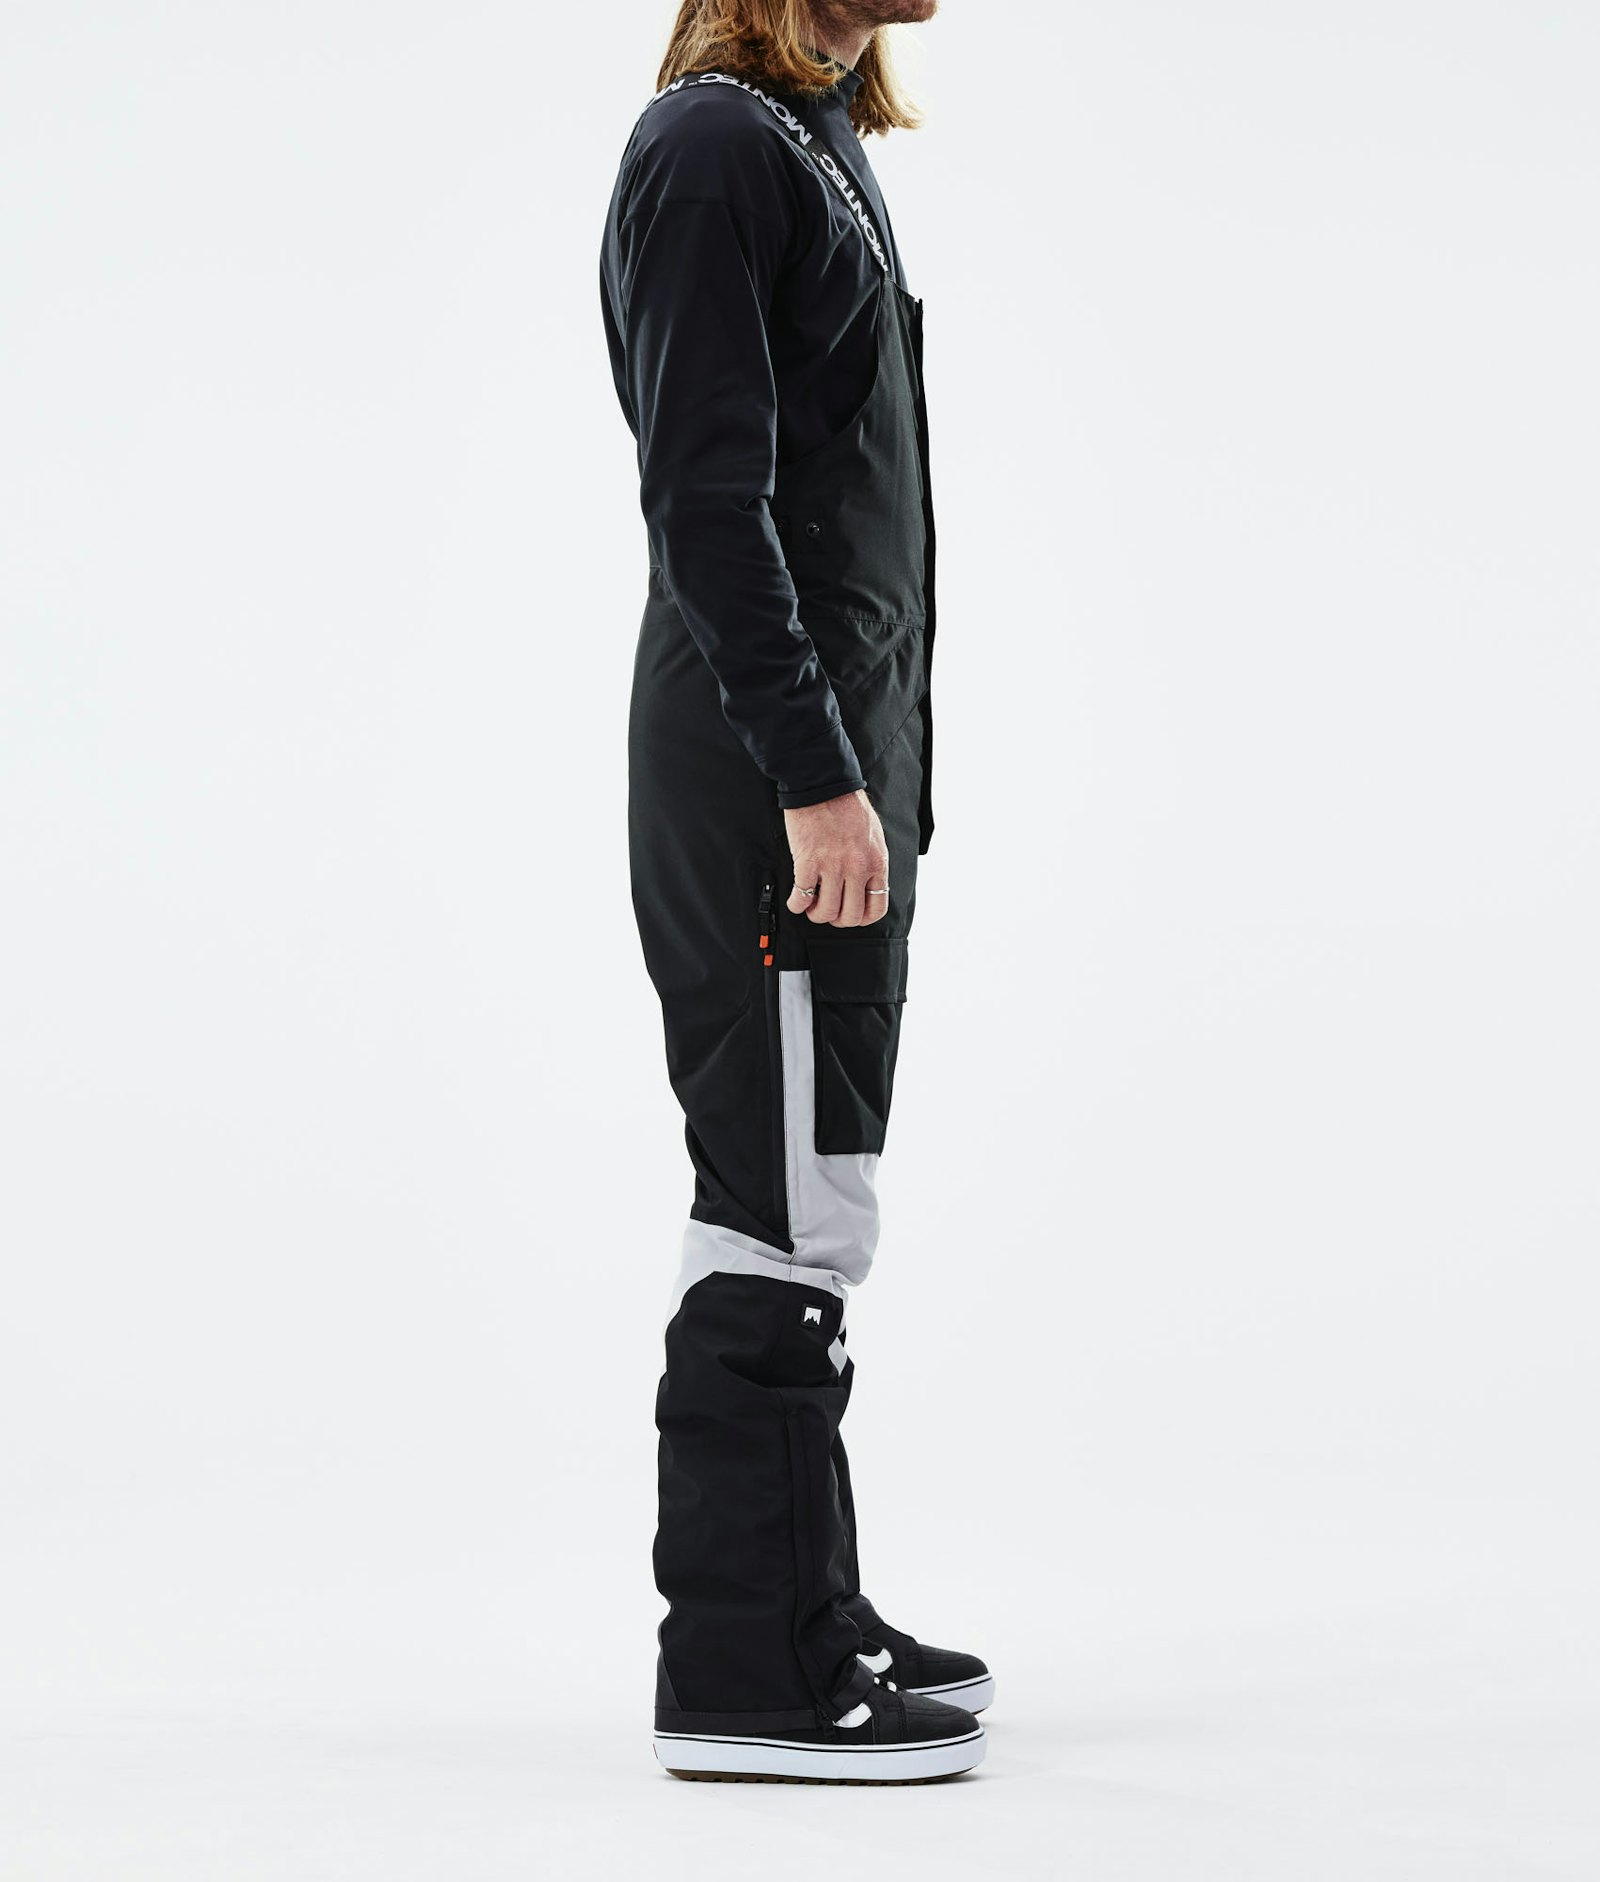 Fawk 2021 Snowboard Pants Men Black/Light Grey/Black Renewed